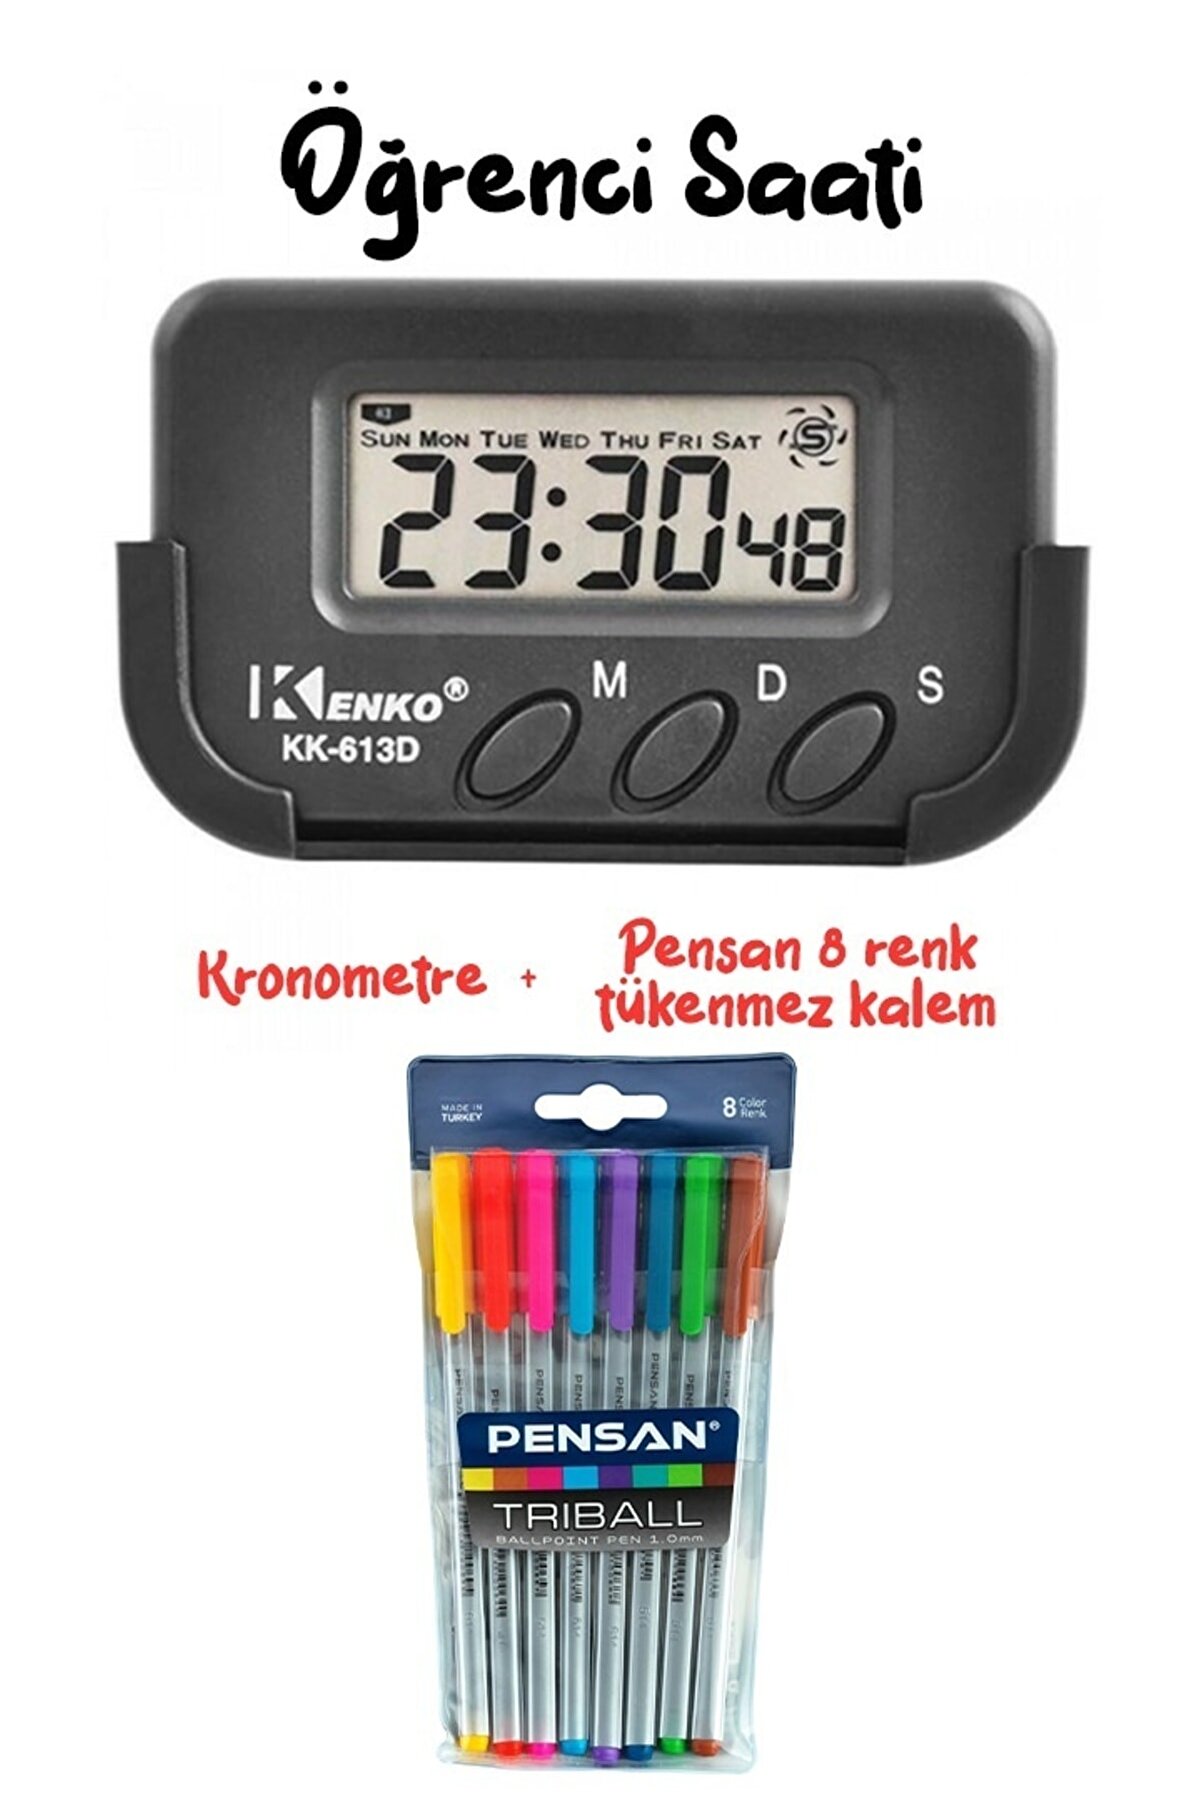 Kenko Pomodoro Öğrenci Saati Kronometreli Ders Çalışma Dijital Masa Saati Pensan 8 Renk Tükenmez Kalem